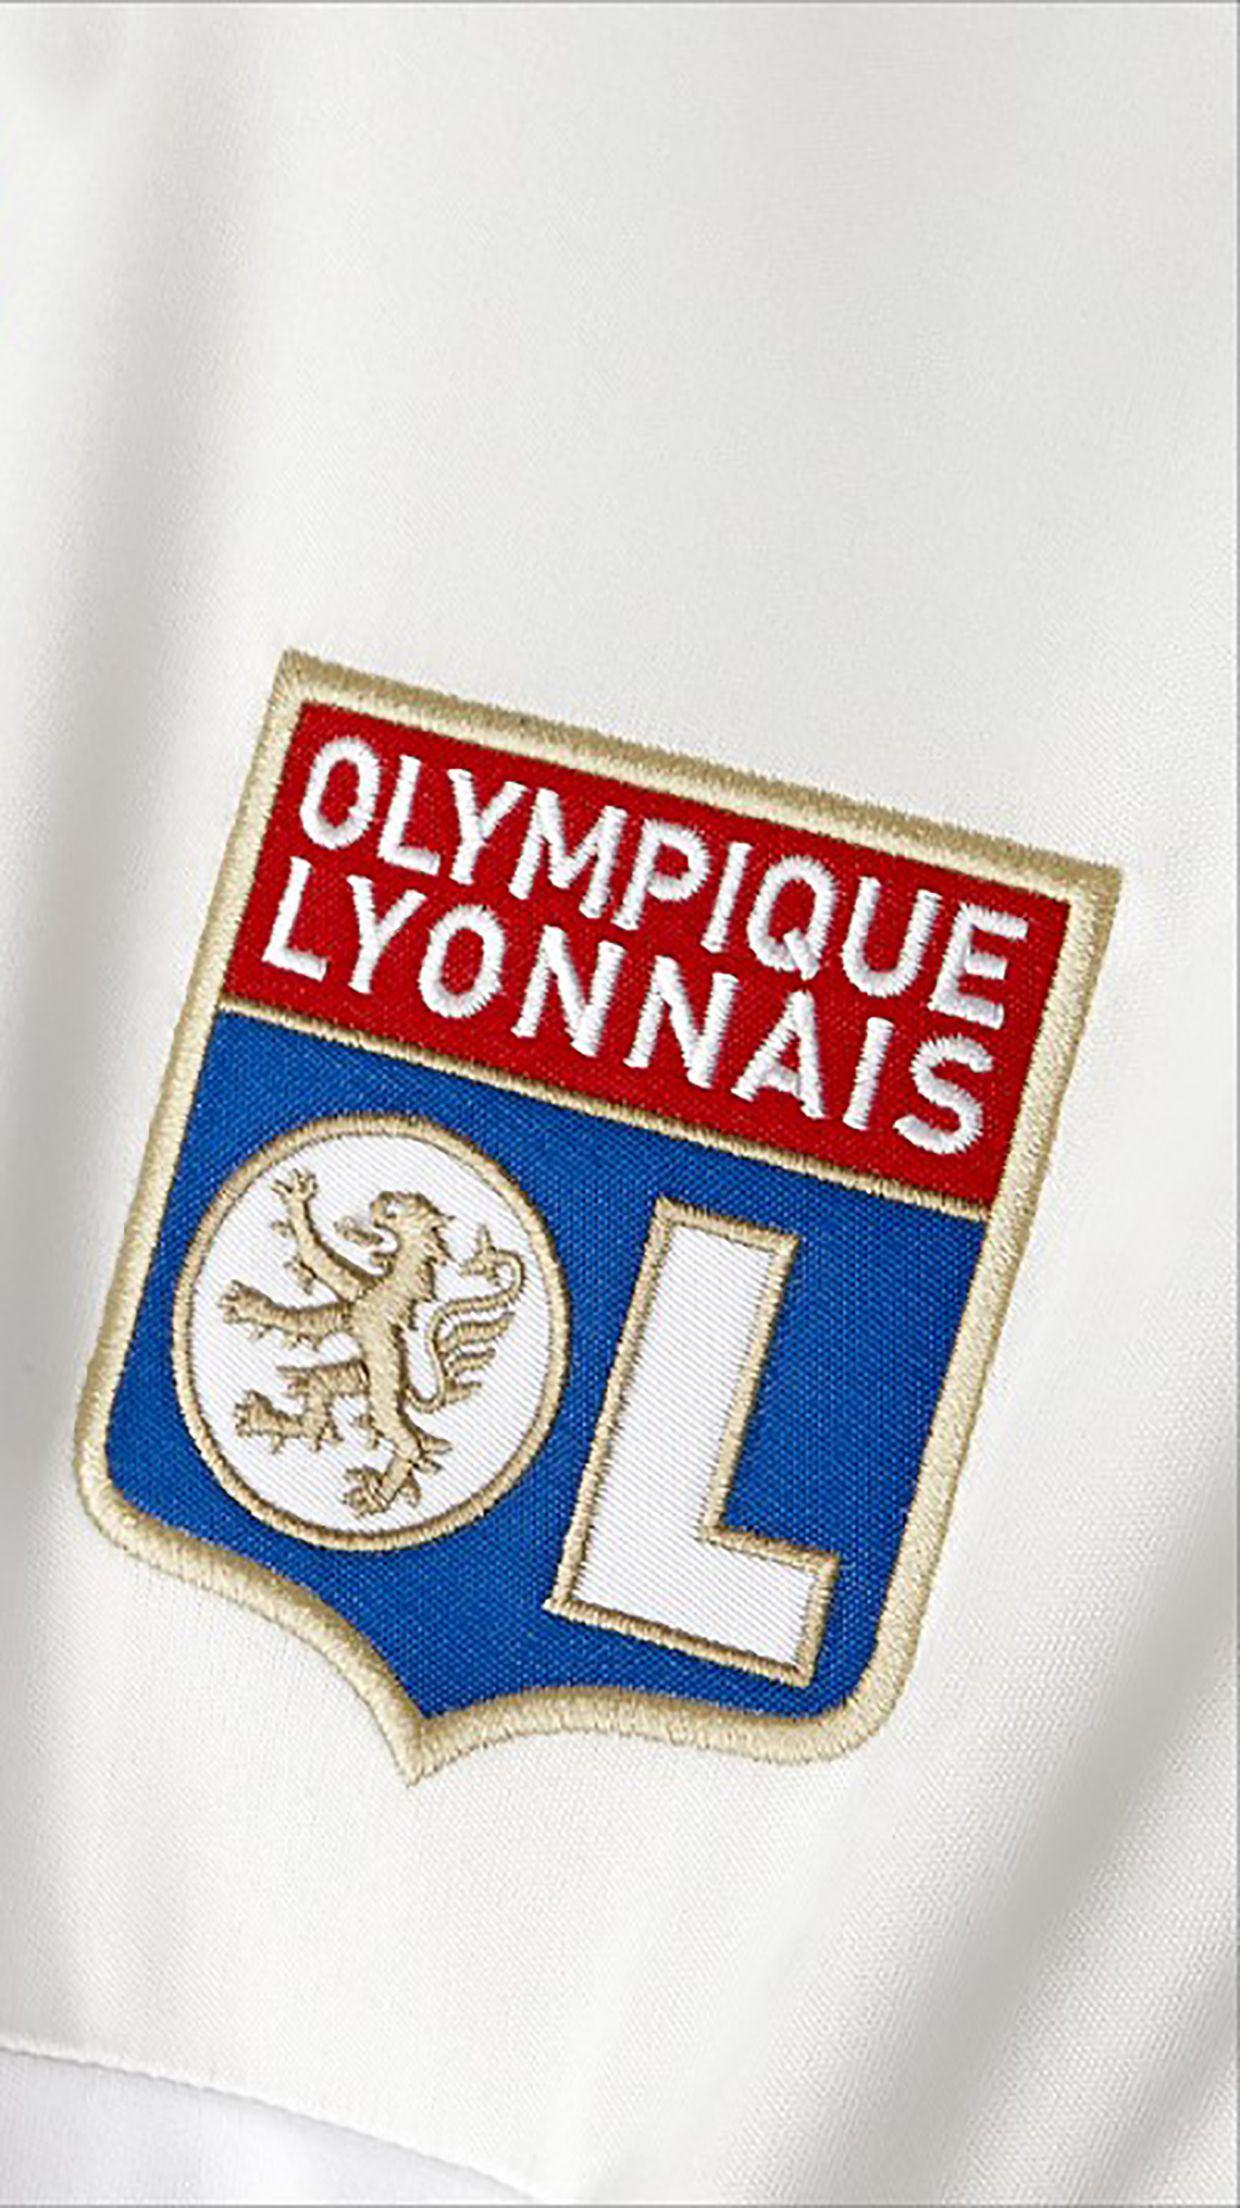 Olympique Lyonnais, Logo 1 Wallpaper for iPhone X, 6